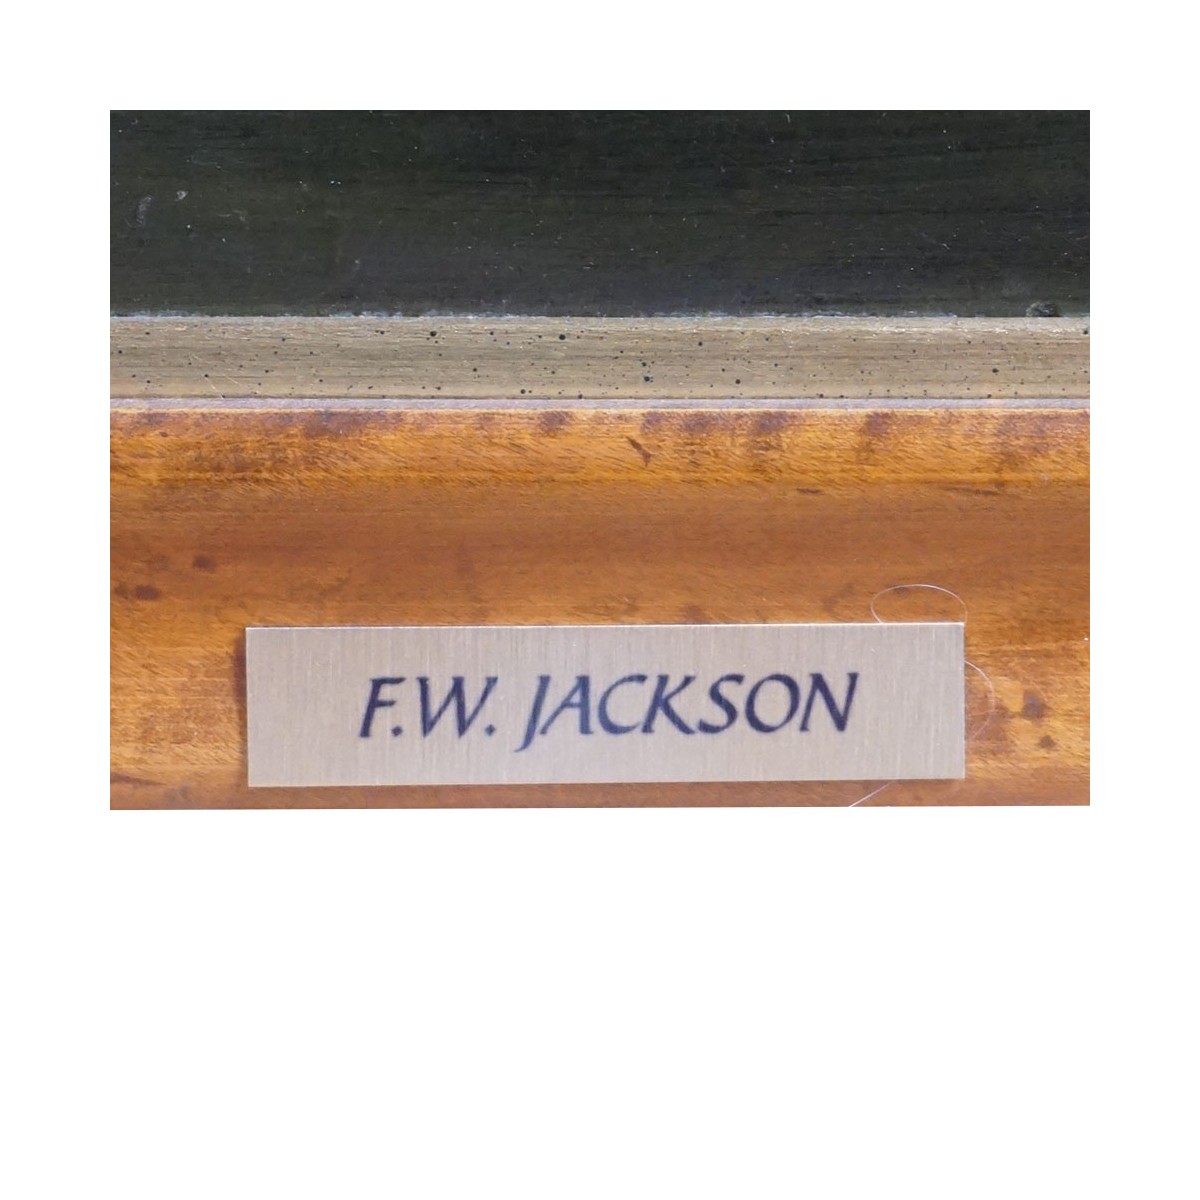 F.W. Jackson (18/19th C.)